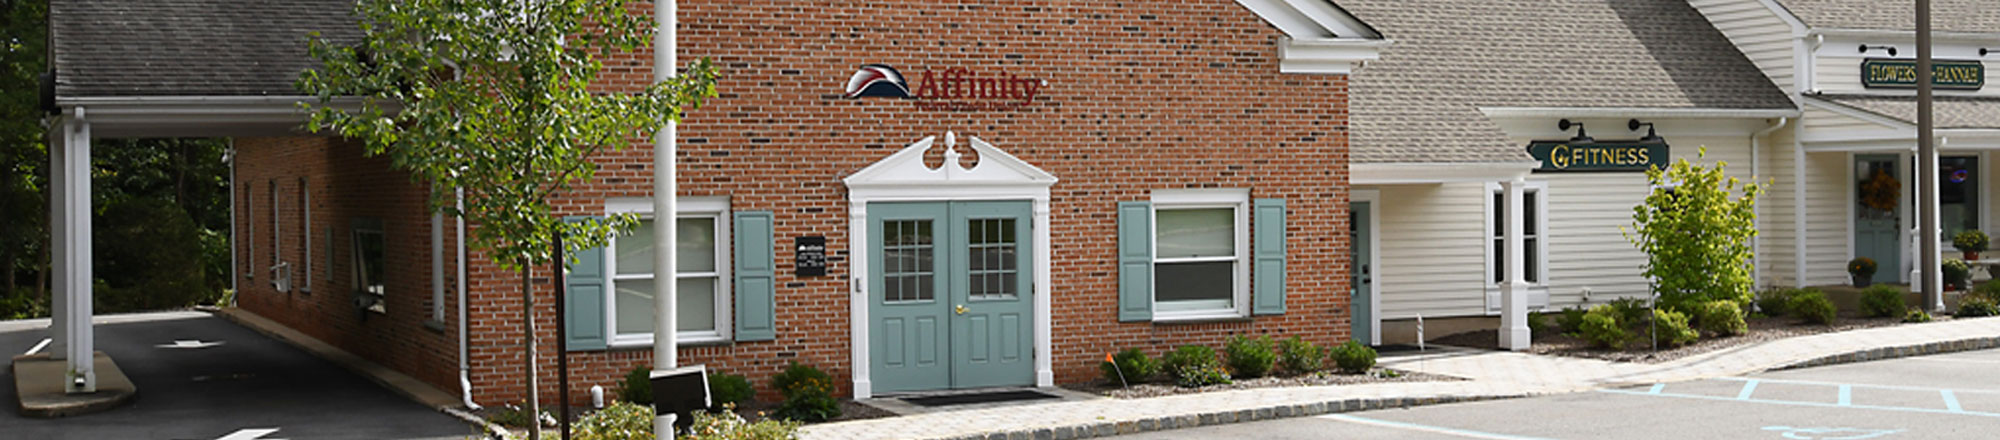 Affinity branch Morristown, NJ